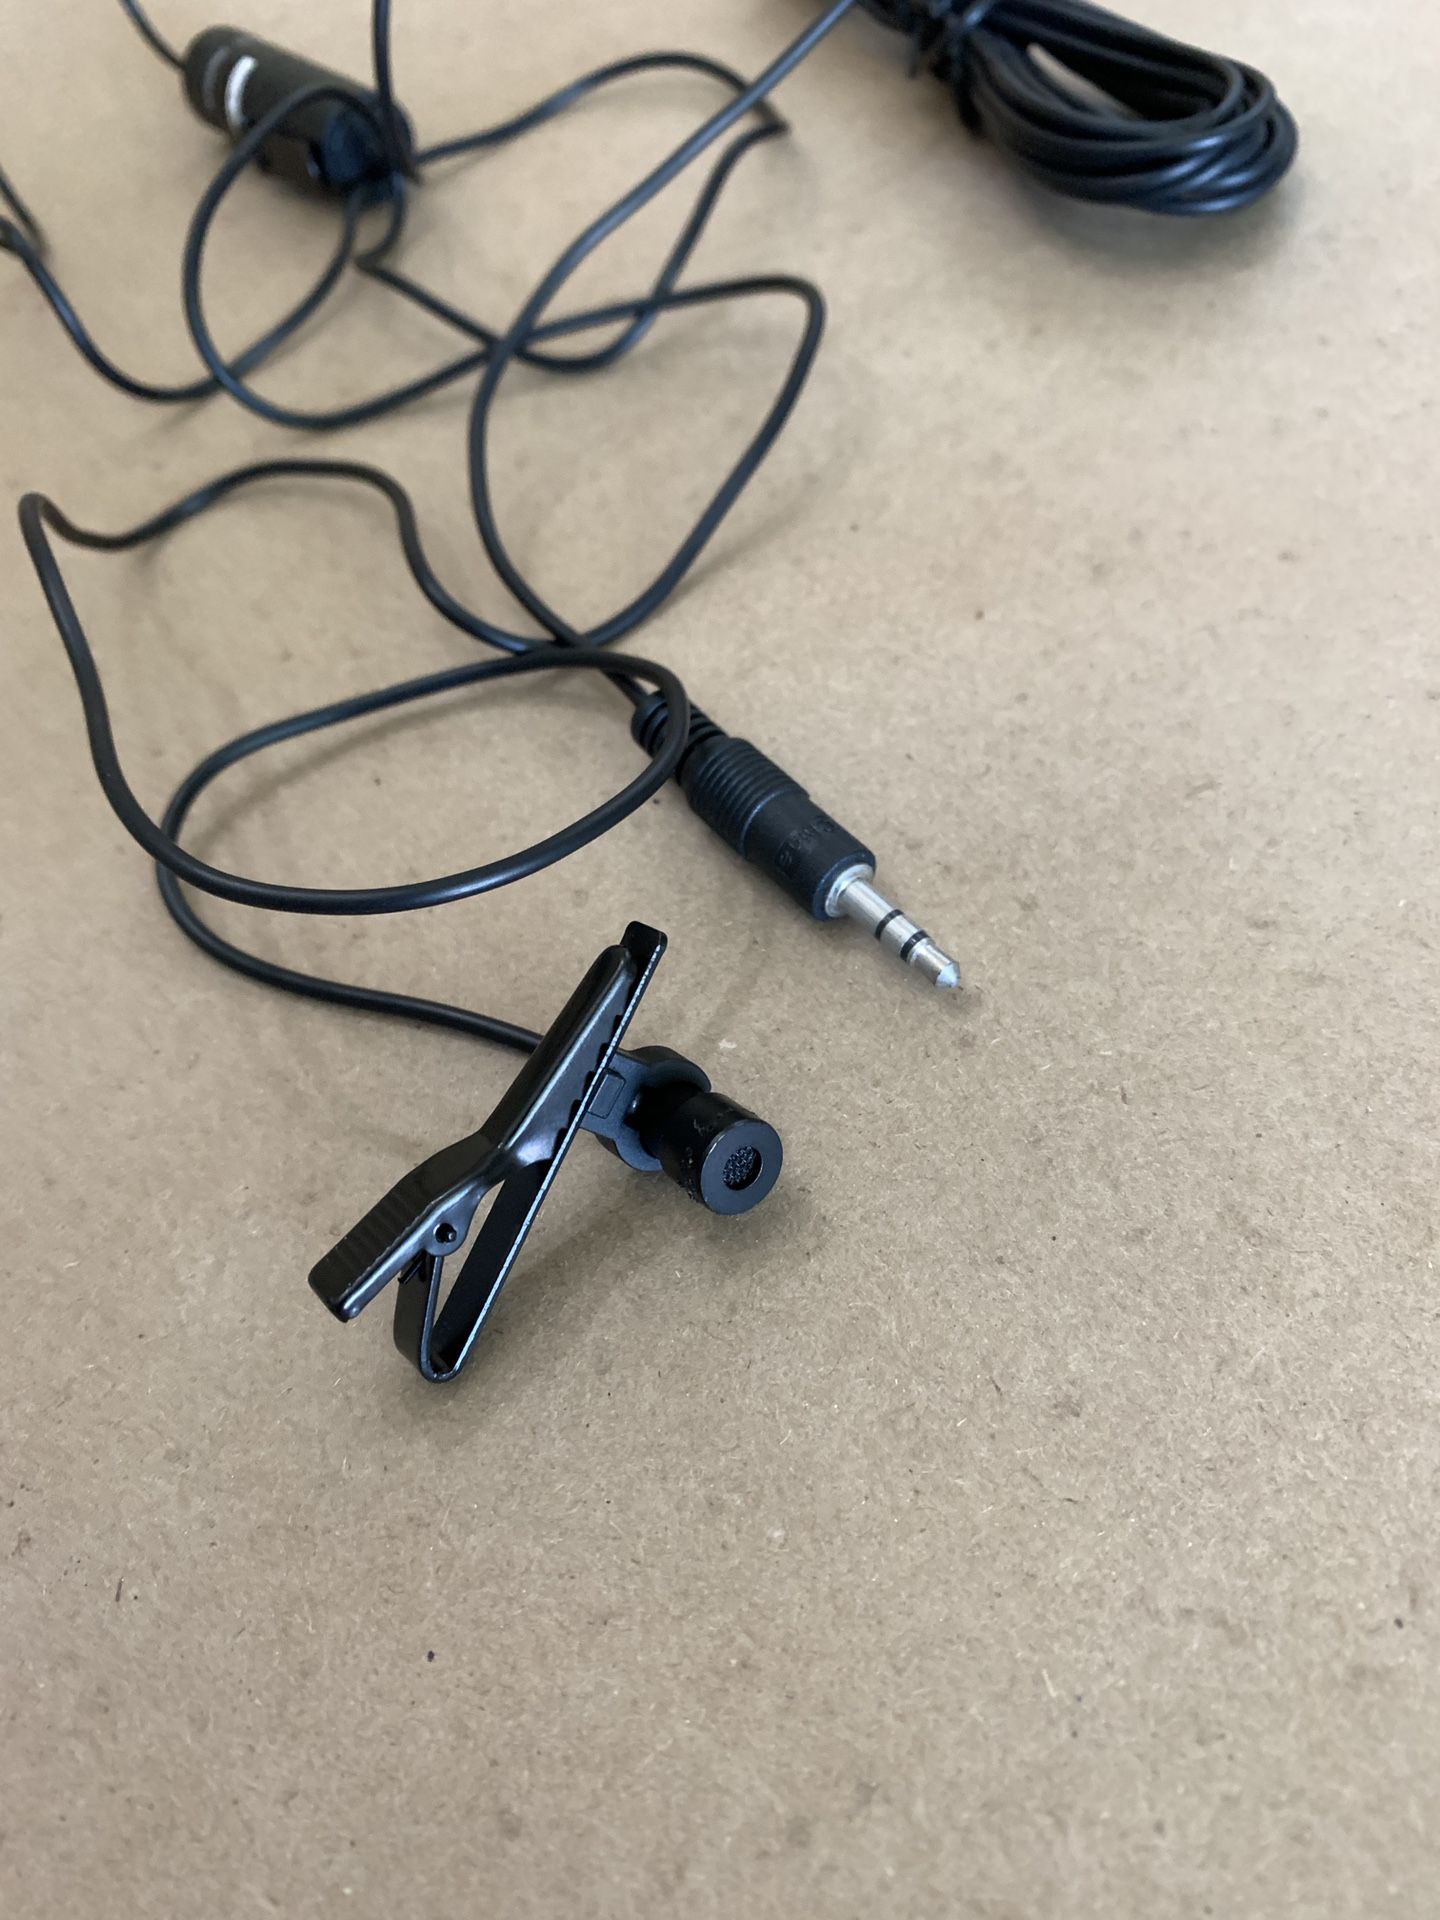 Audio-Technica omin lavalier mic